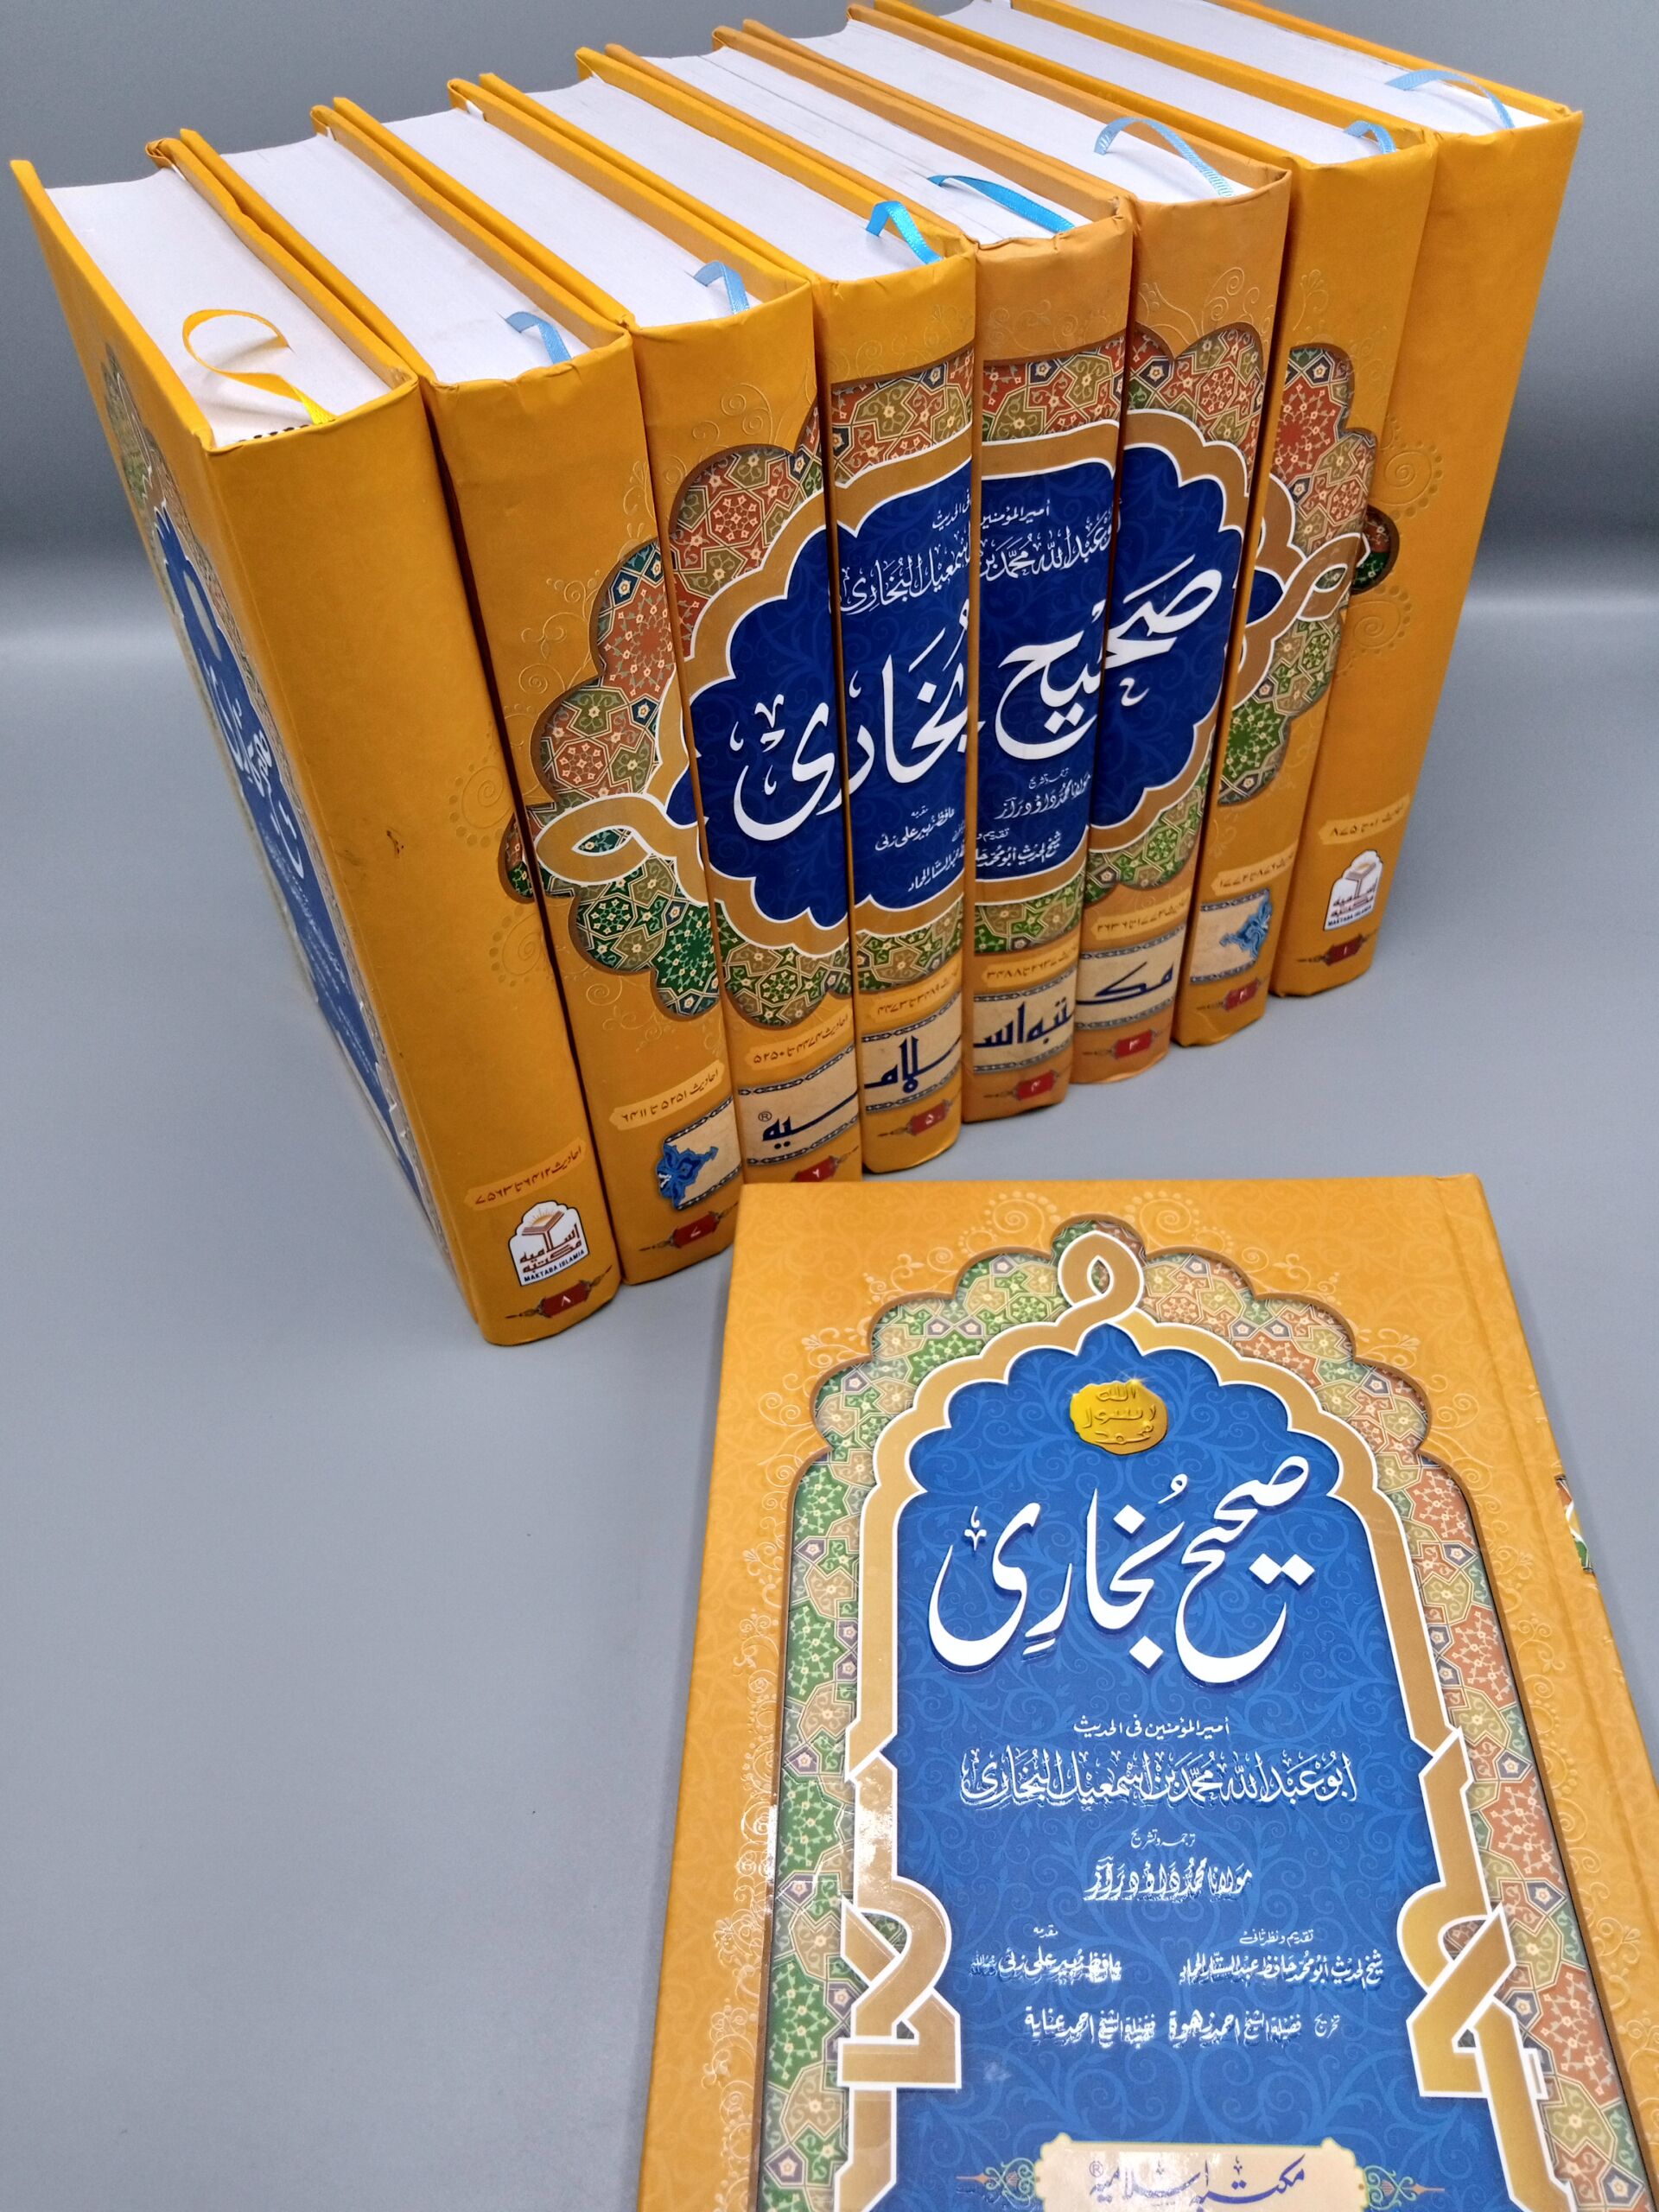 Sahih Bukhari 8 Vol Arabic Urdu Detailed Complete Set